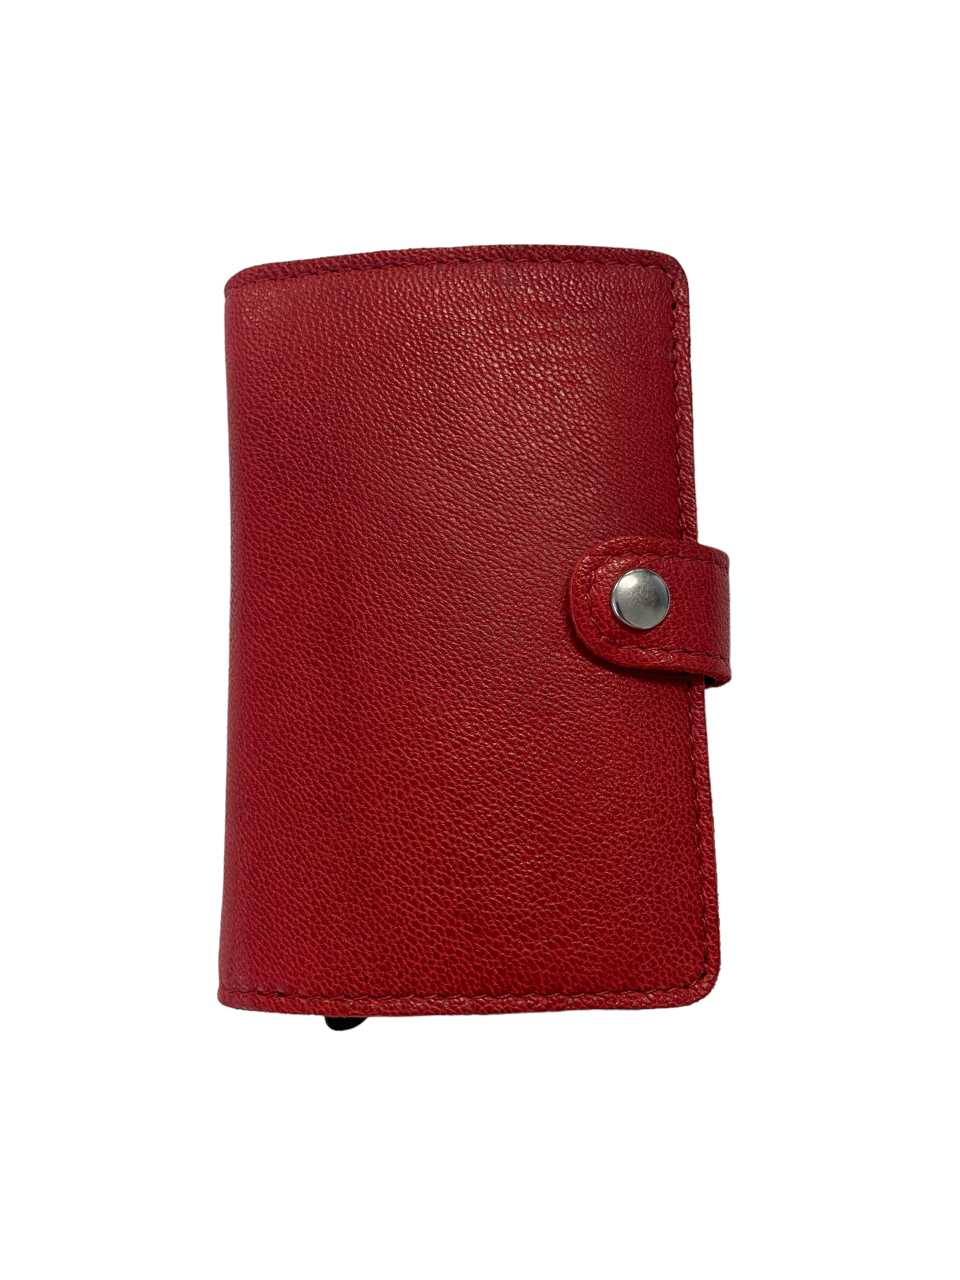 Oran - DL-02 Leather Spring load 8 card wallet - Red-1